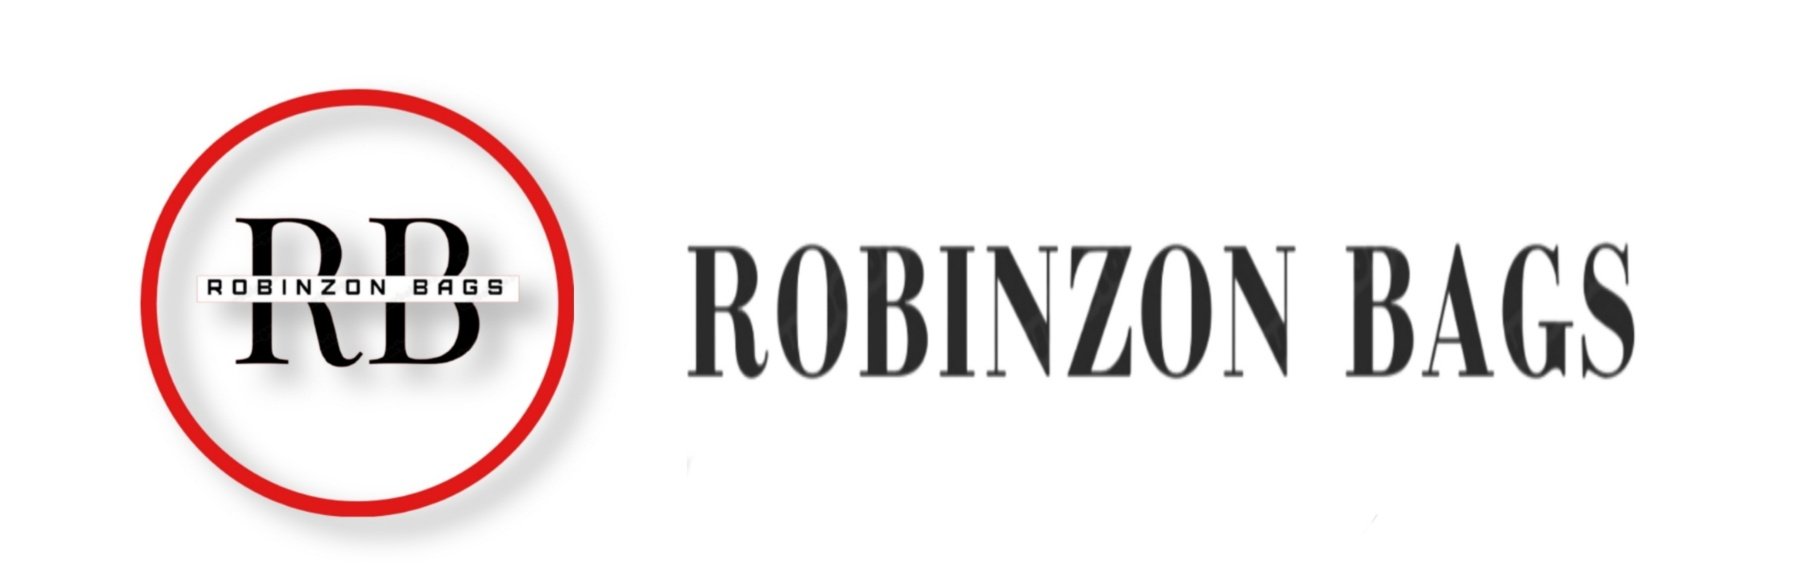 Robinzon-Bags